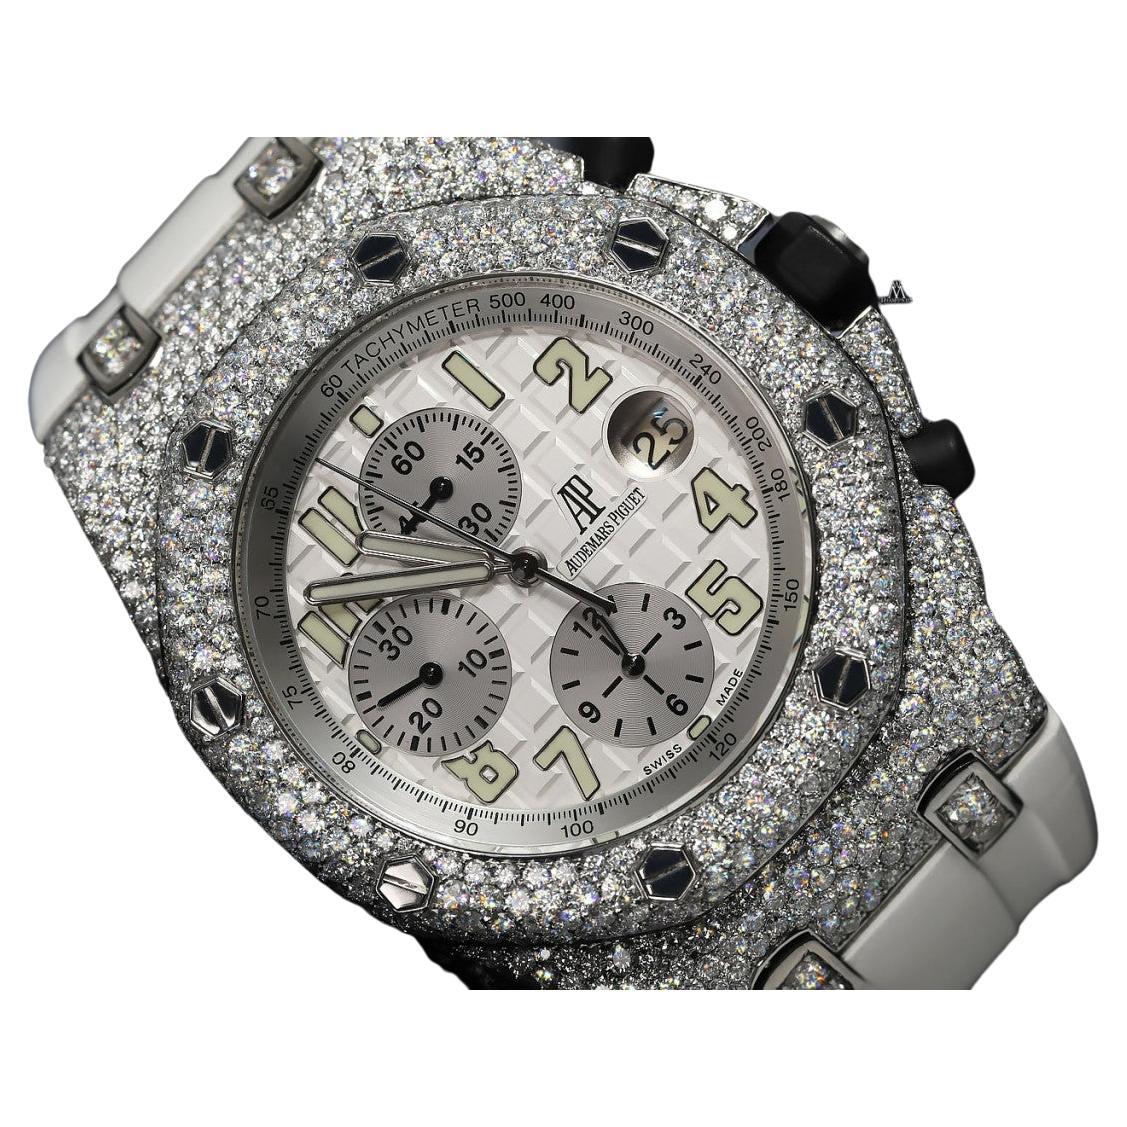 Audemars Piguet Royal Oak Offshore Customized with Genuine Diamonds Watch